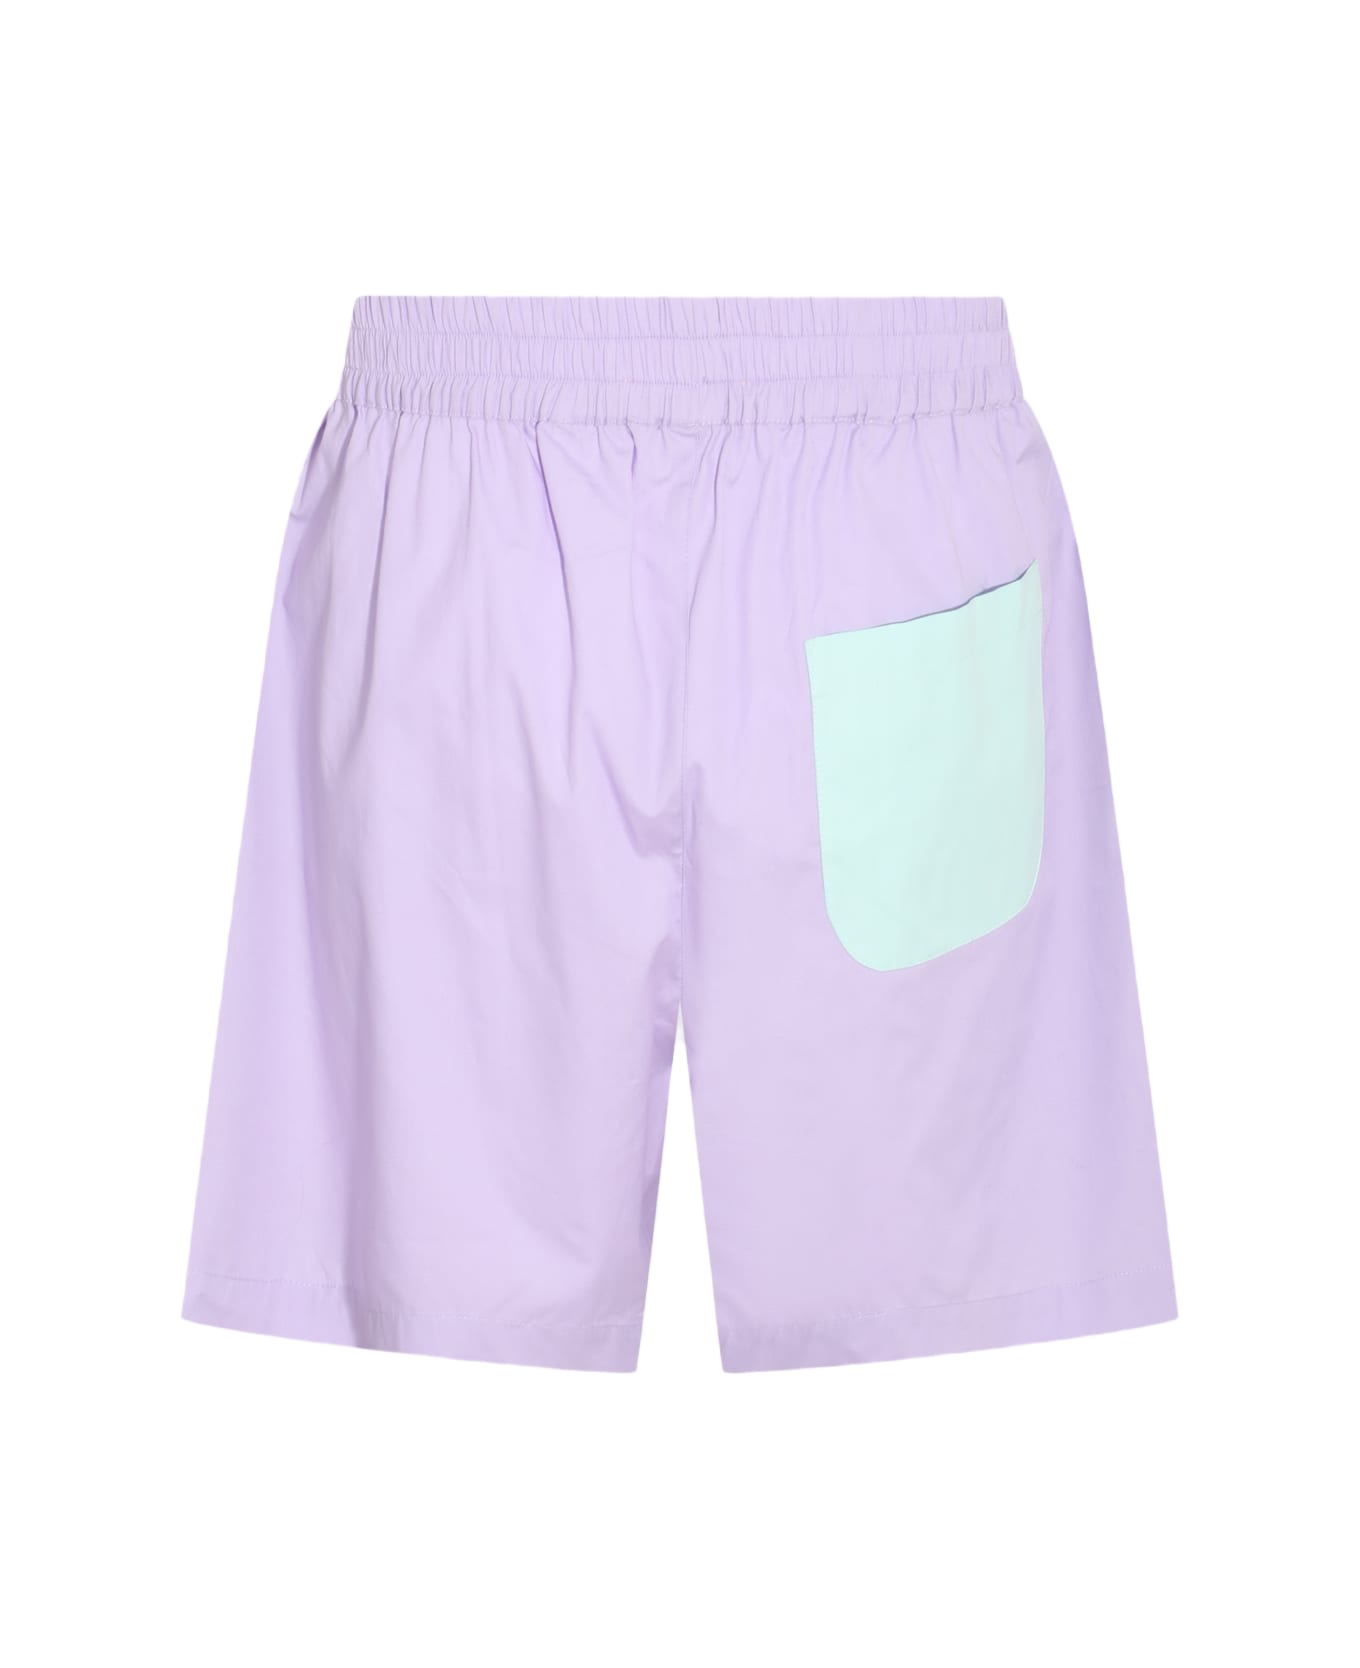 ih nom uh nit Lavender Cotton Shorts - LAVENDER ショートパンツ